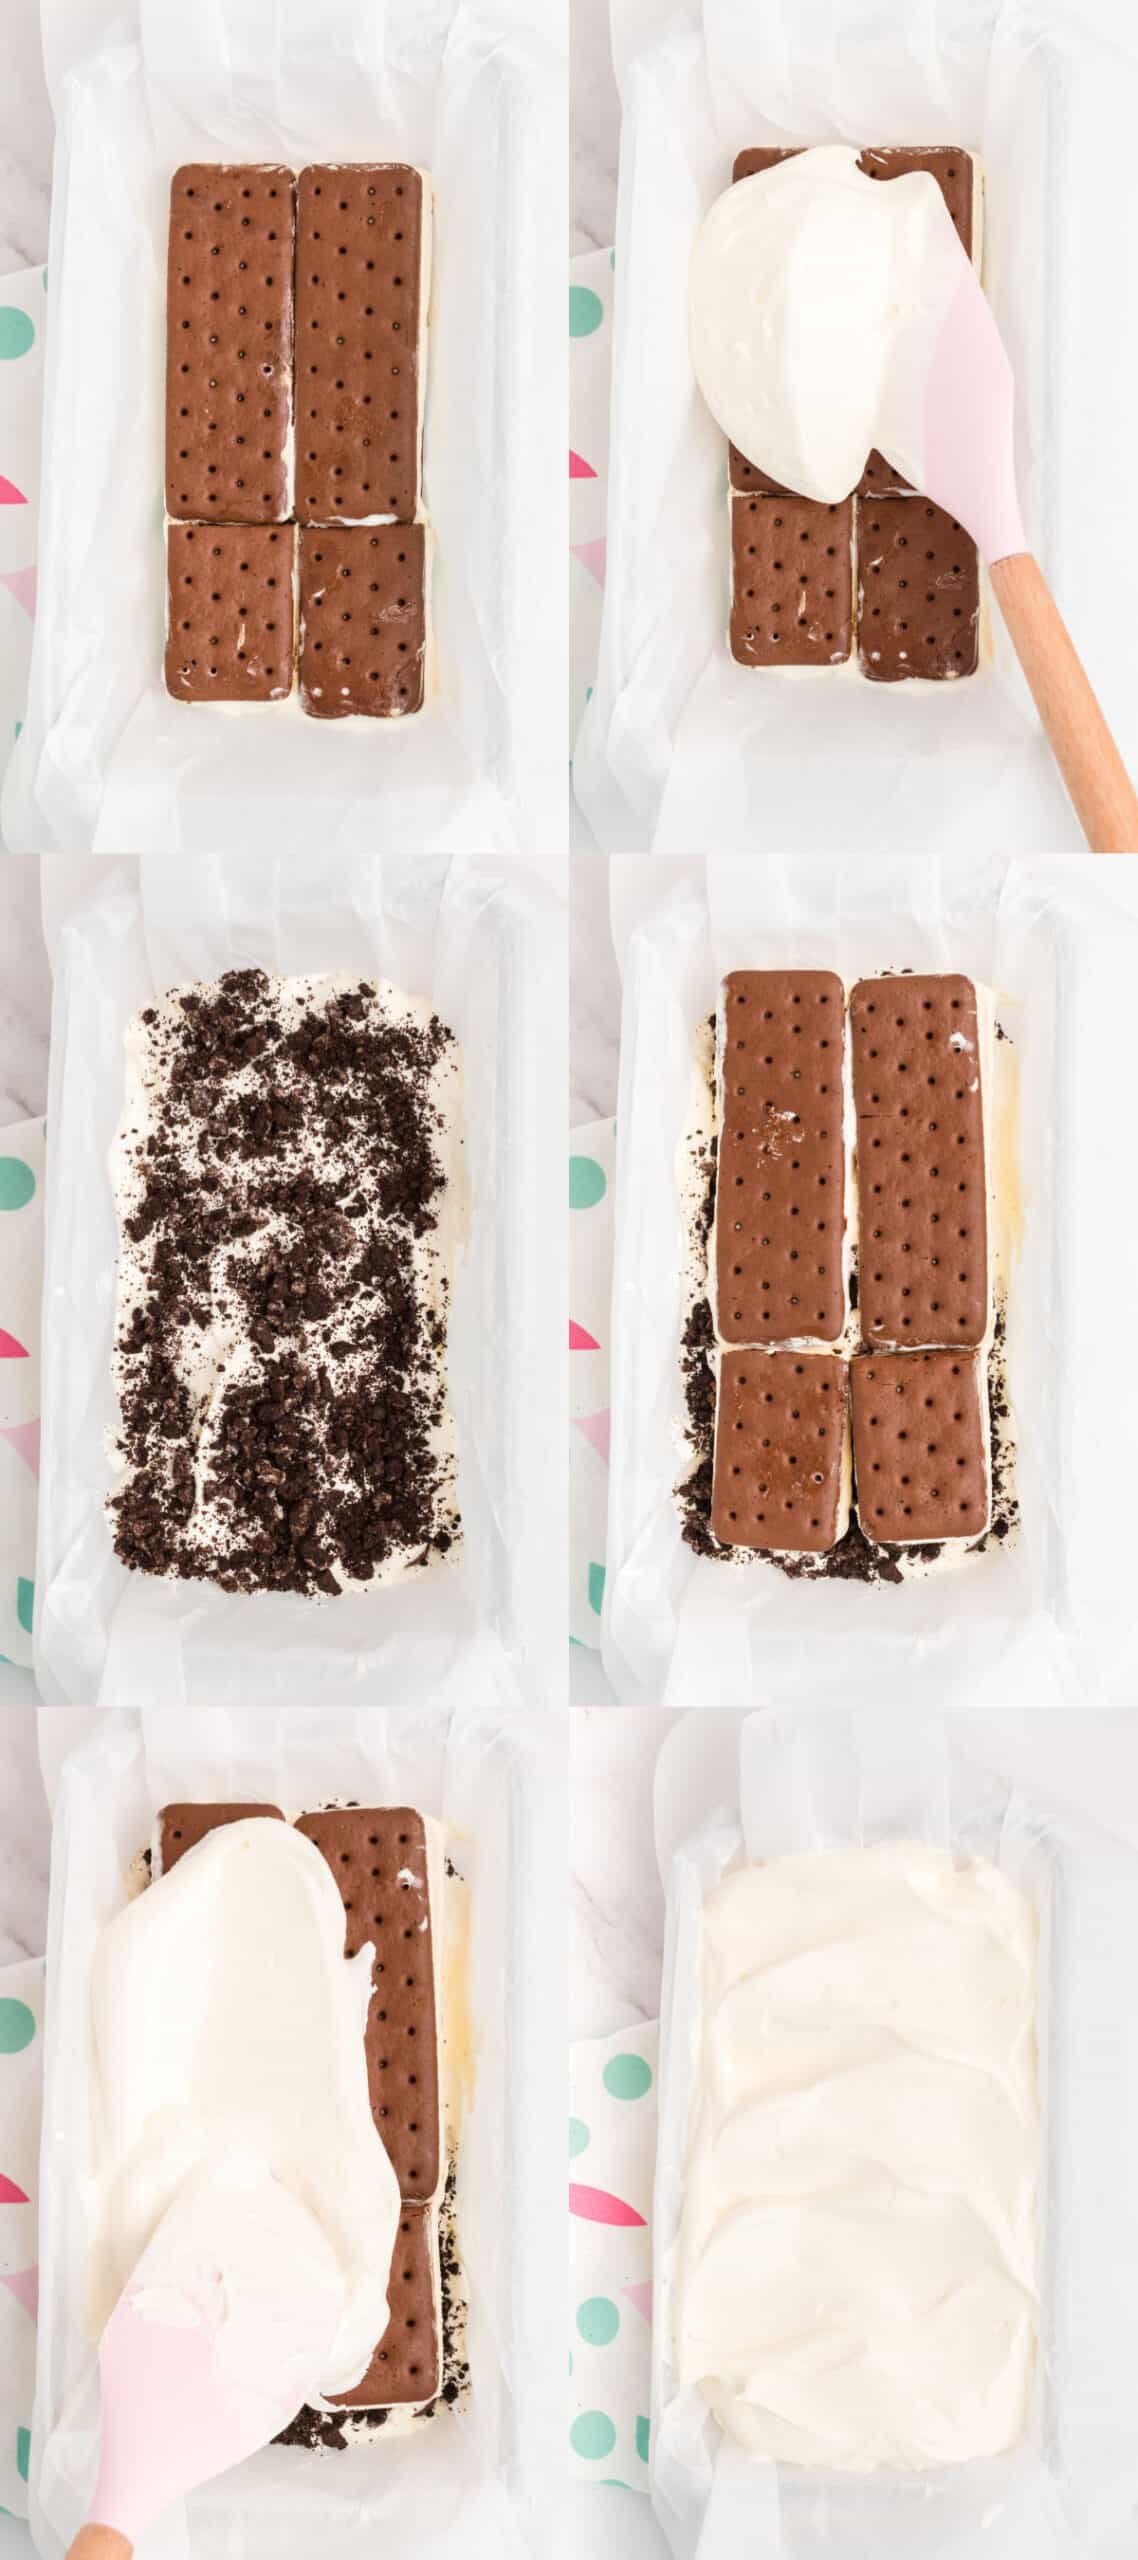 Ice Cream Sandwich Cake – Like Mother, Like Daughter